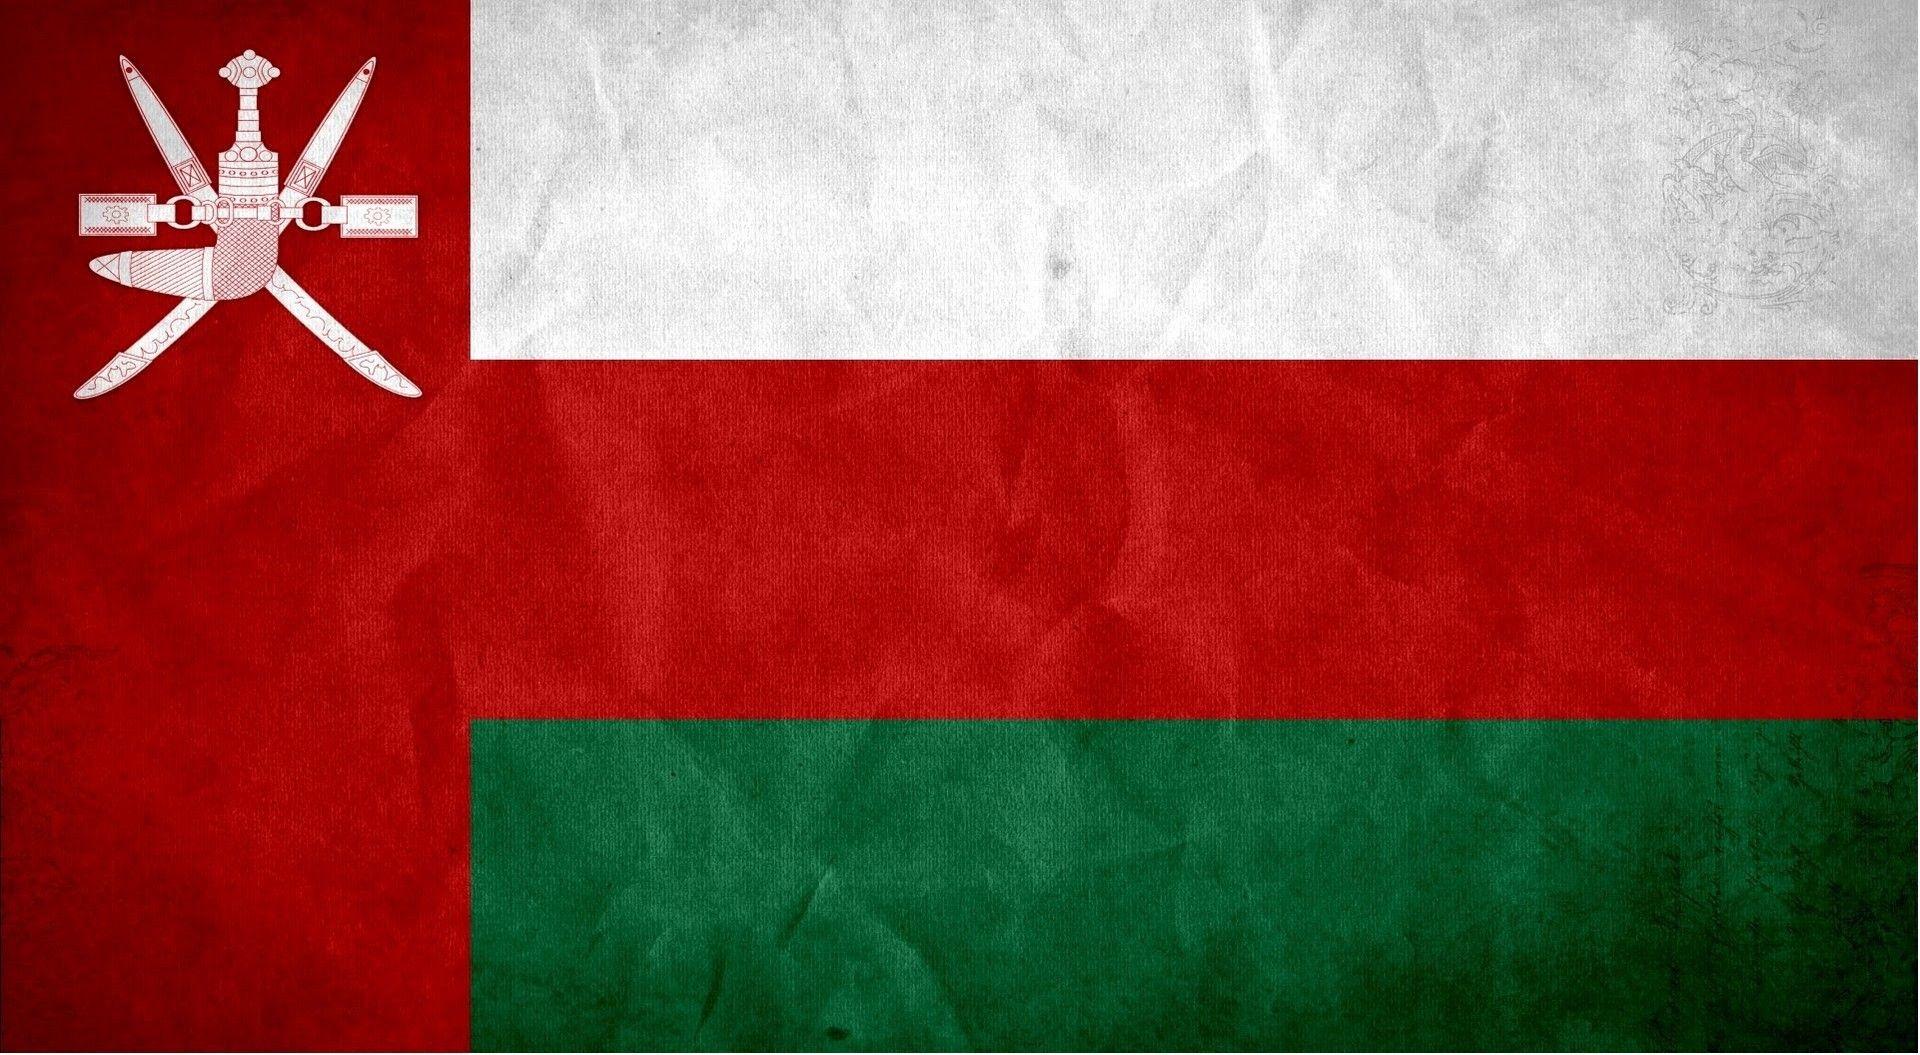 Flag of Oman wallpaper. Flags wallpaper. Flags